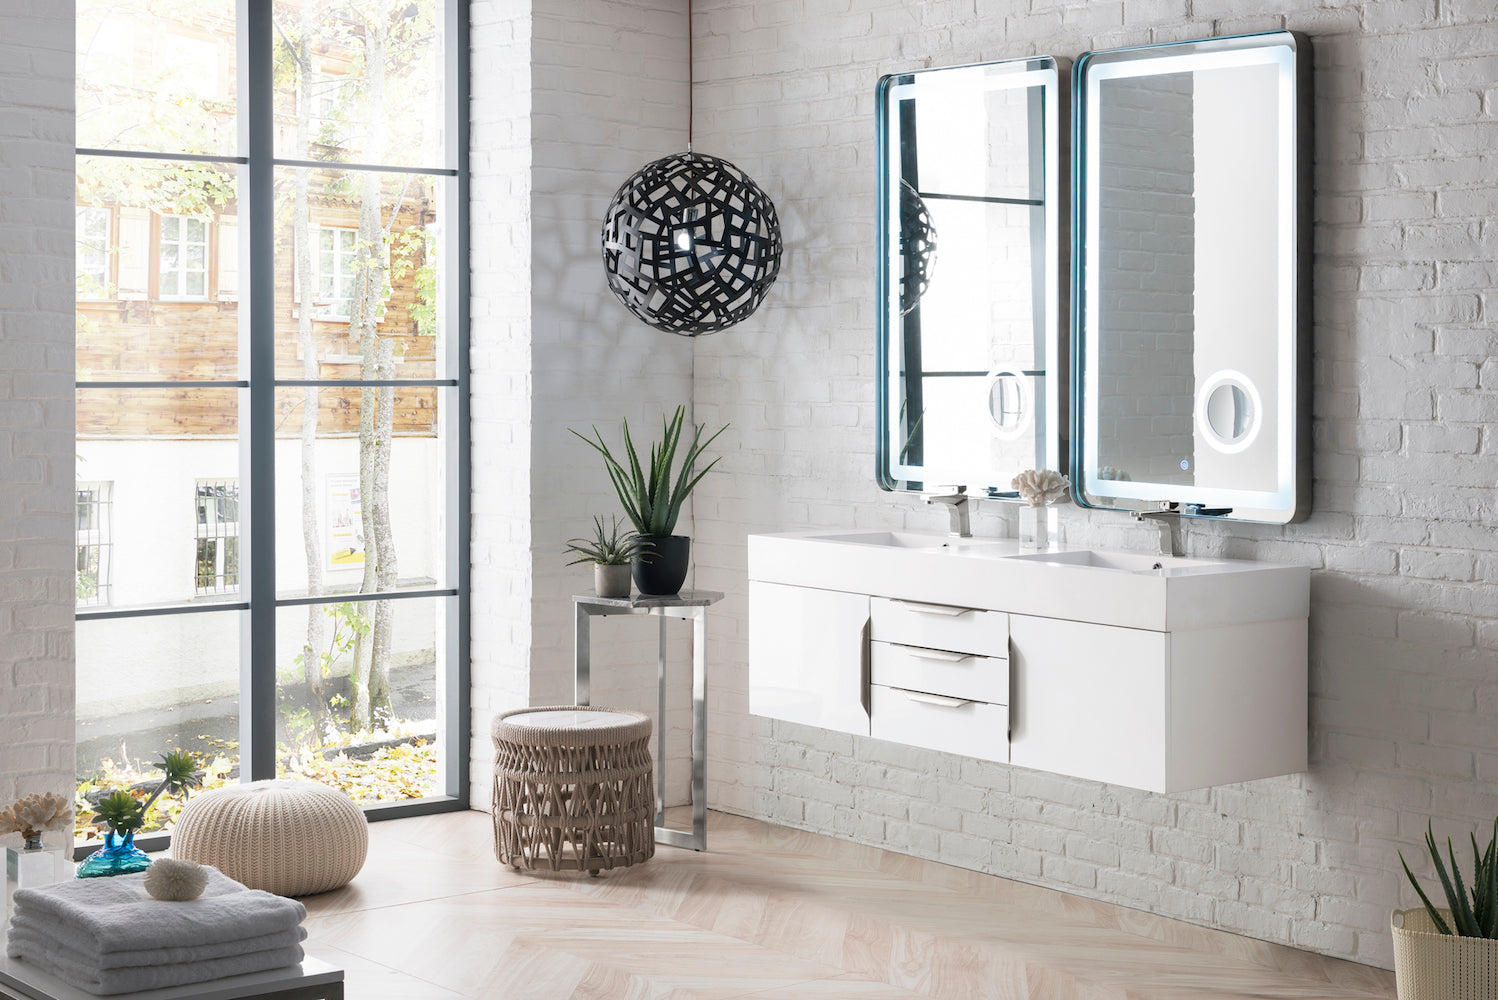 59" Mercer Island Double Sink Bathroom Vanity, Glossy White w/ Brushed Nickel